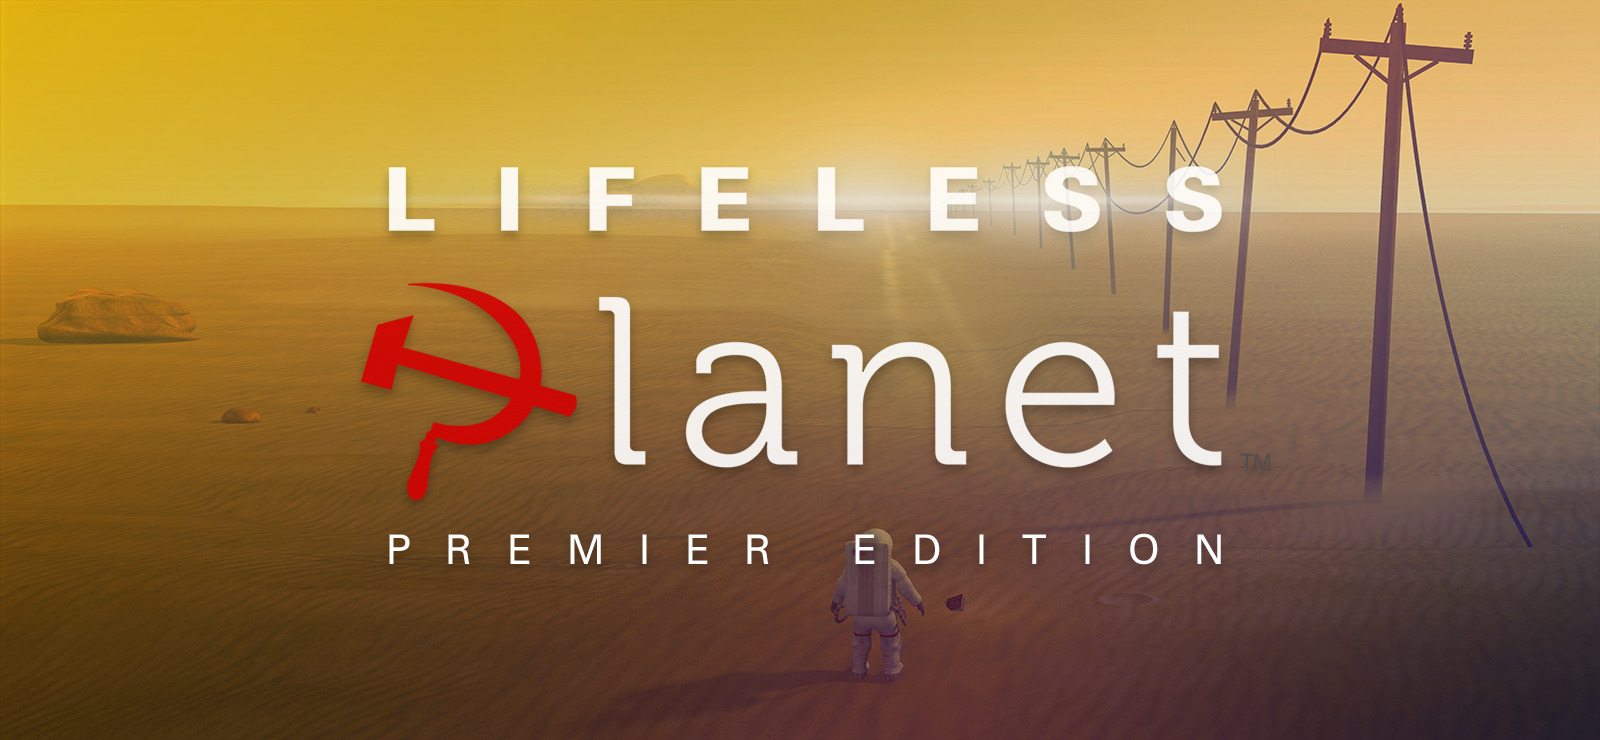 lifeless planet premier edition ign